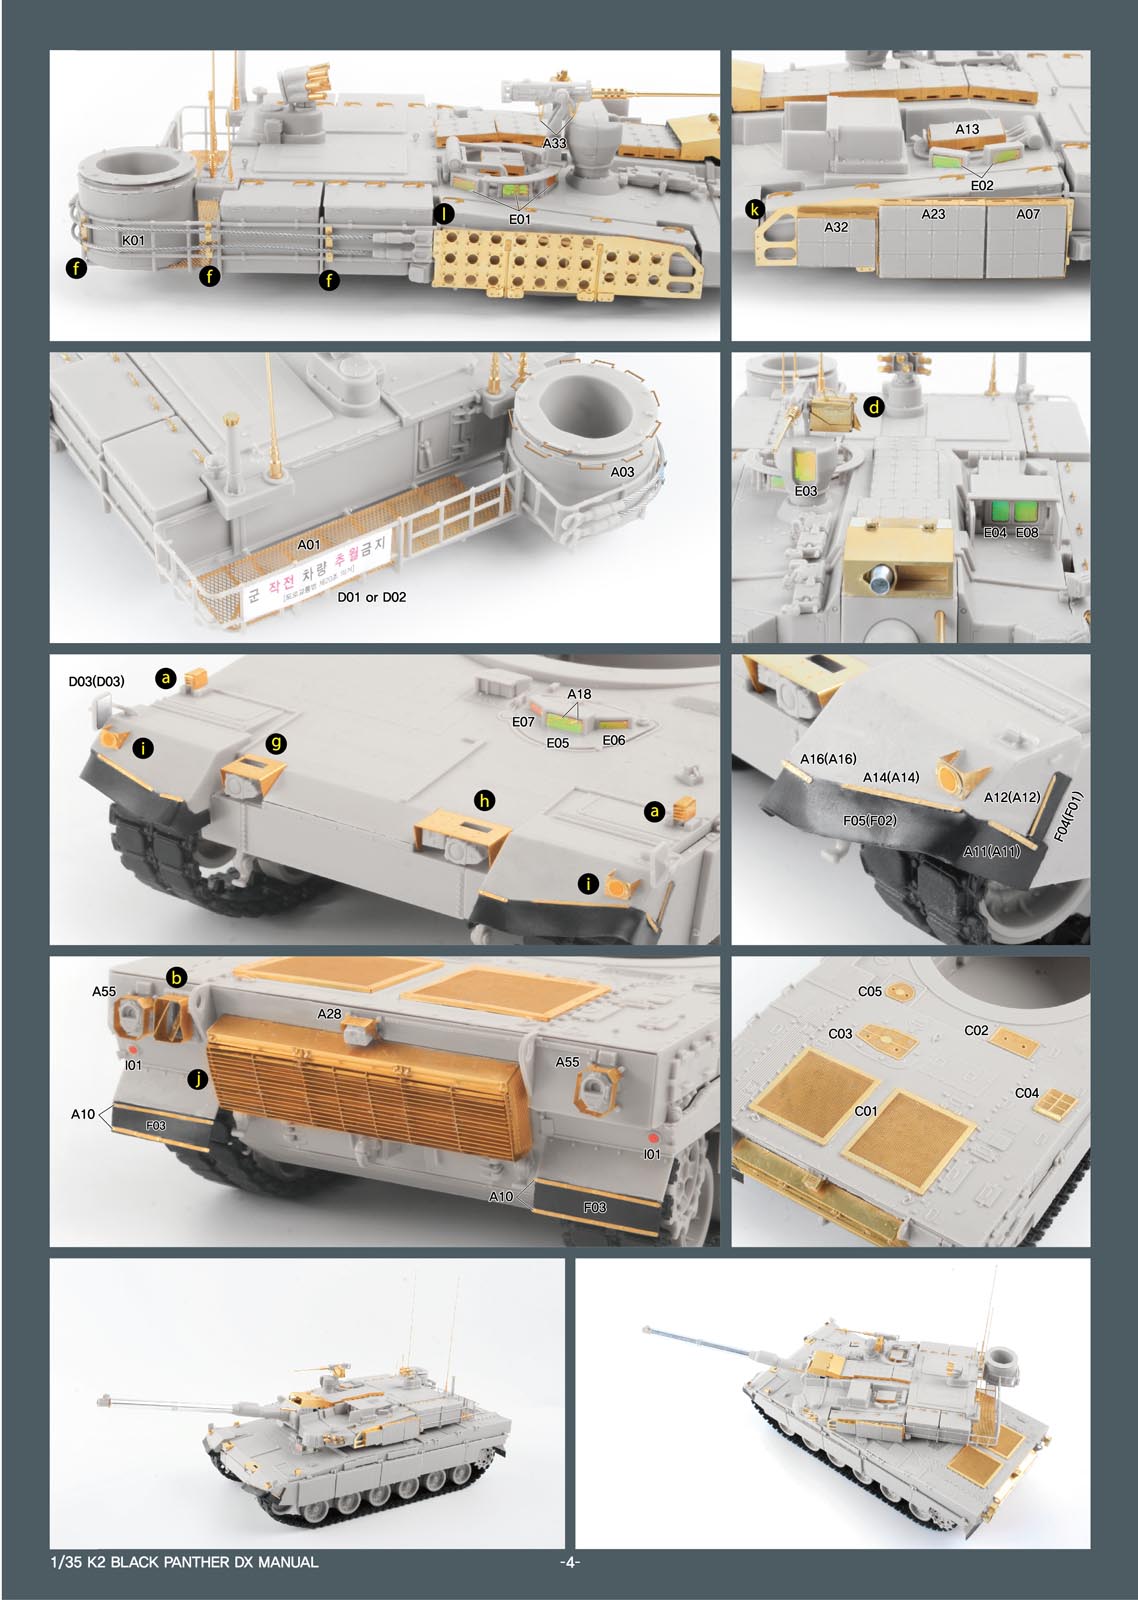 1/35 ROKA K2 MBT Value Pack Detail Up Set for Academy - Click Image to Close